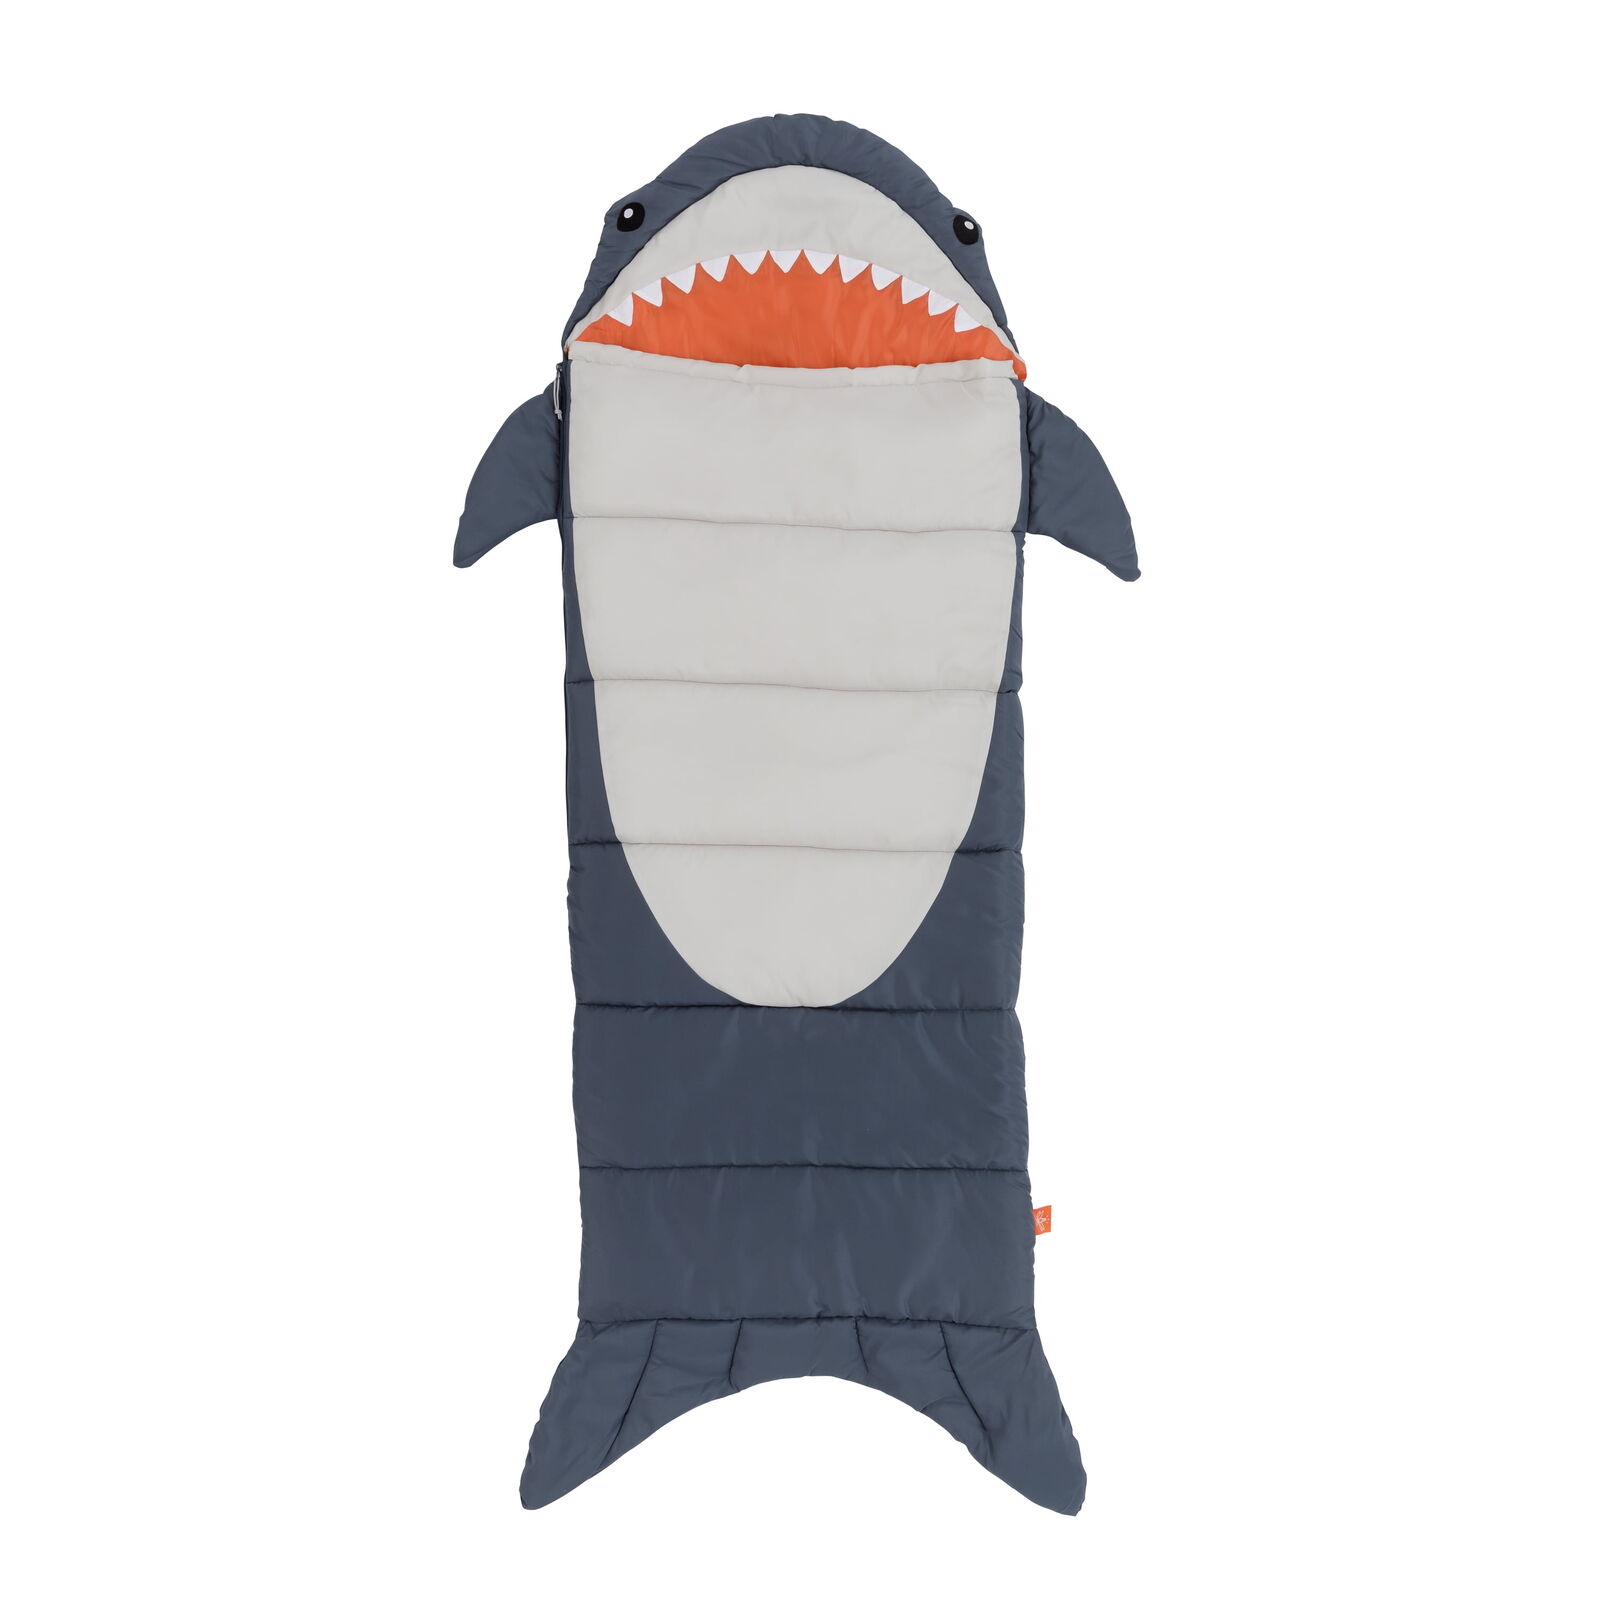  Finn the Shark Kid\'s Sleeping Bag - Navy/Gray